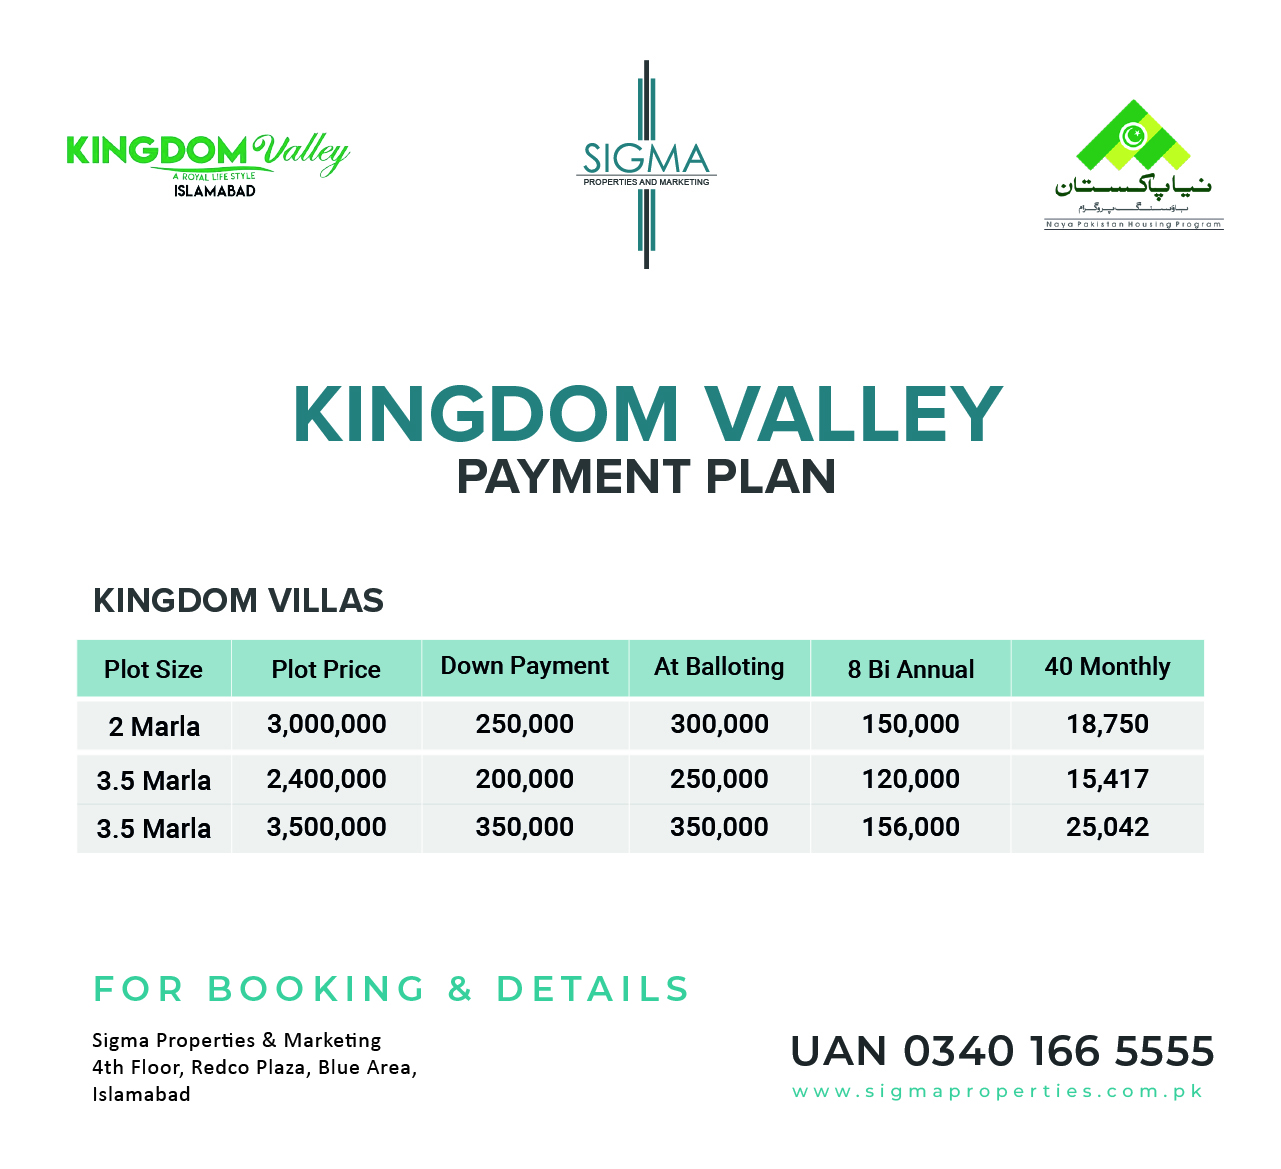 Kingdom Valley Villas Payment Plan